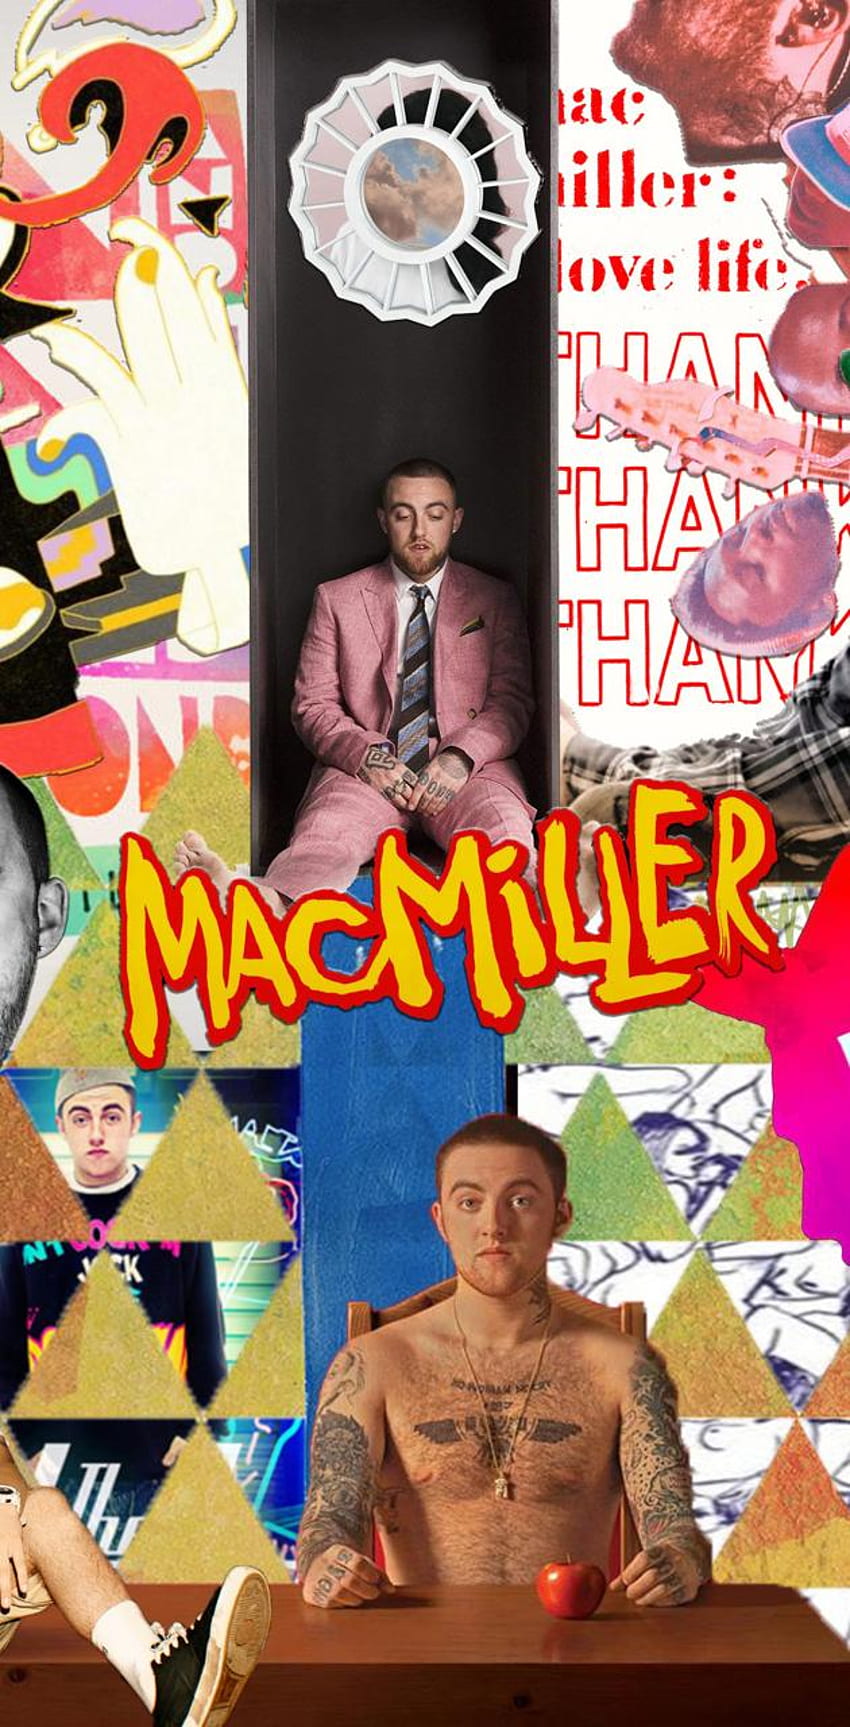 Best Mac miller iPhone HD Wallpapers  iLikeWallpaper